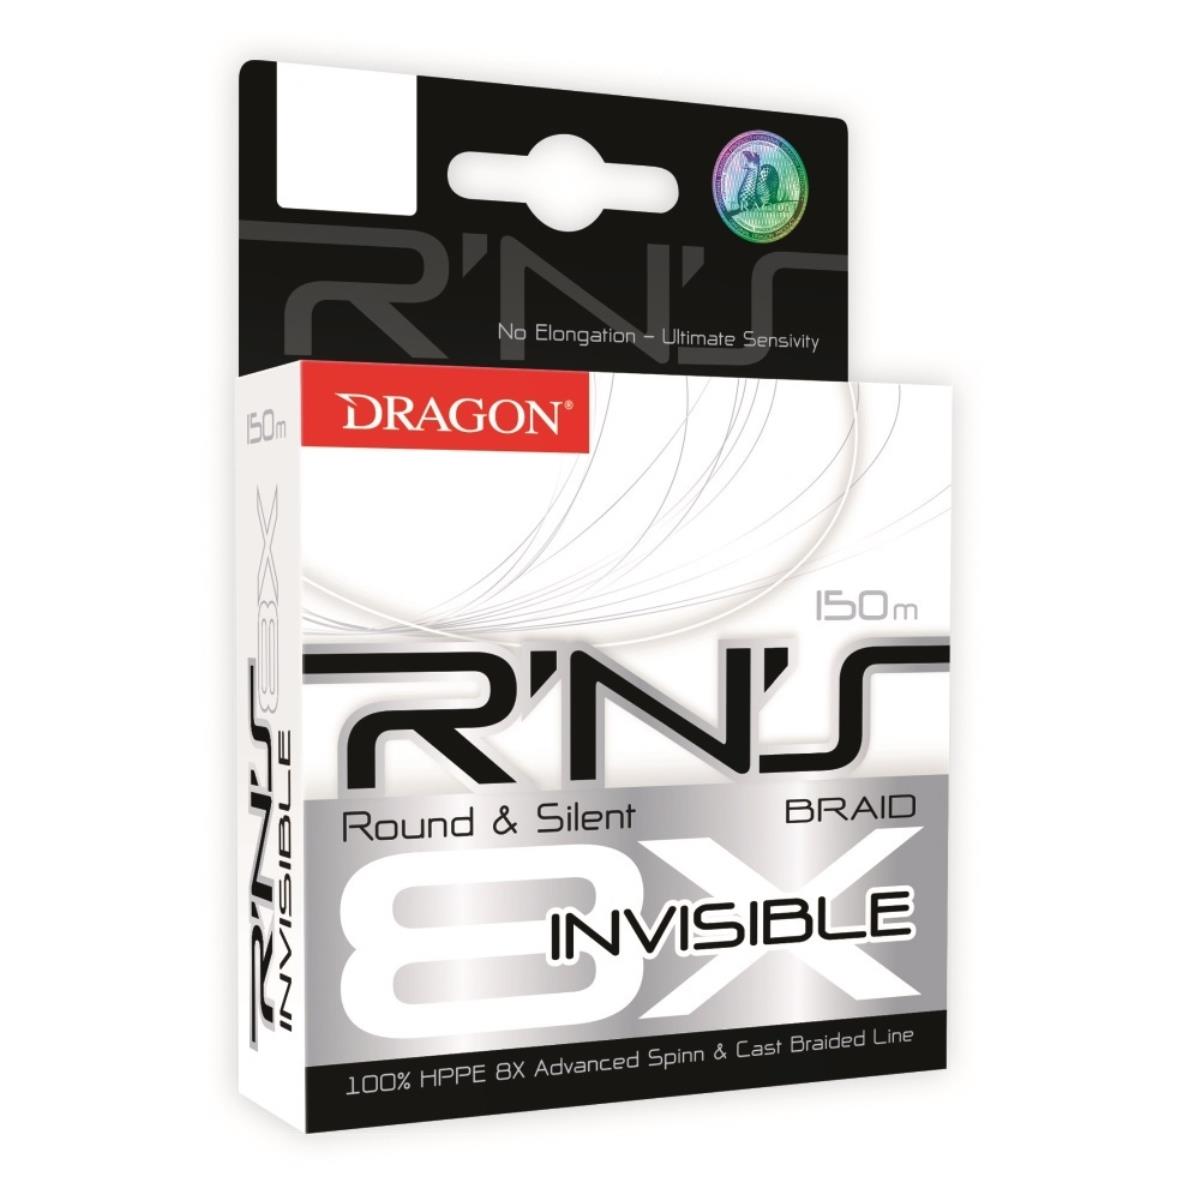 Шнур R'N'S 8X Invisible 150 м Dragon шнур с выключателем oxion 1 8 м цвет прозрачный